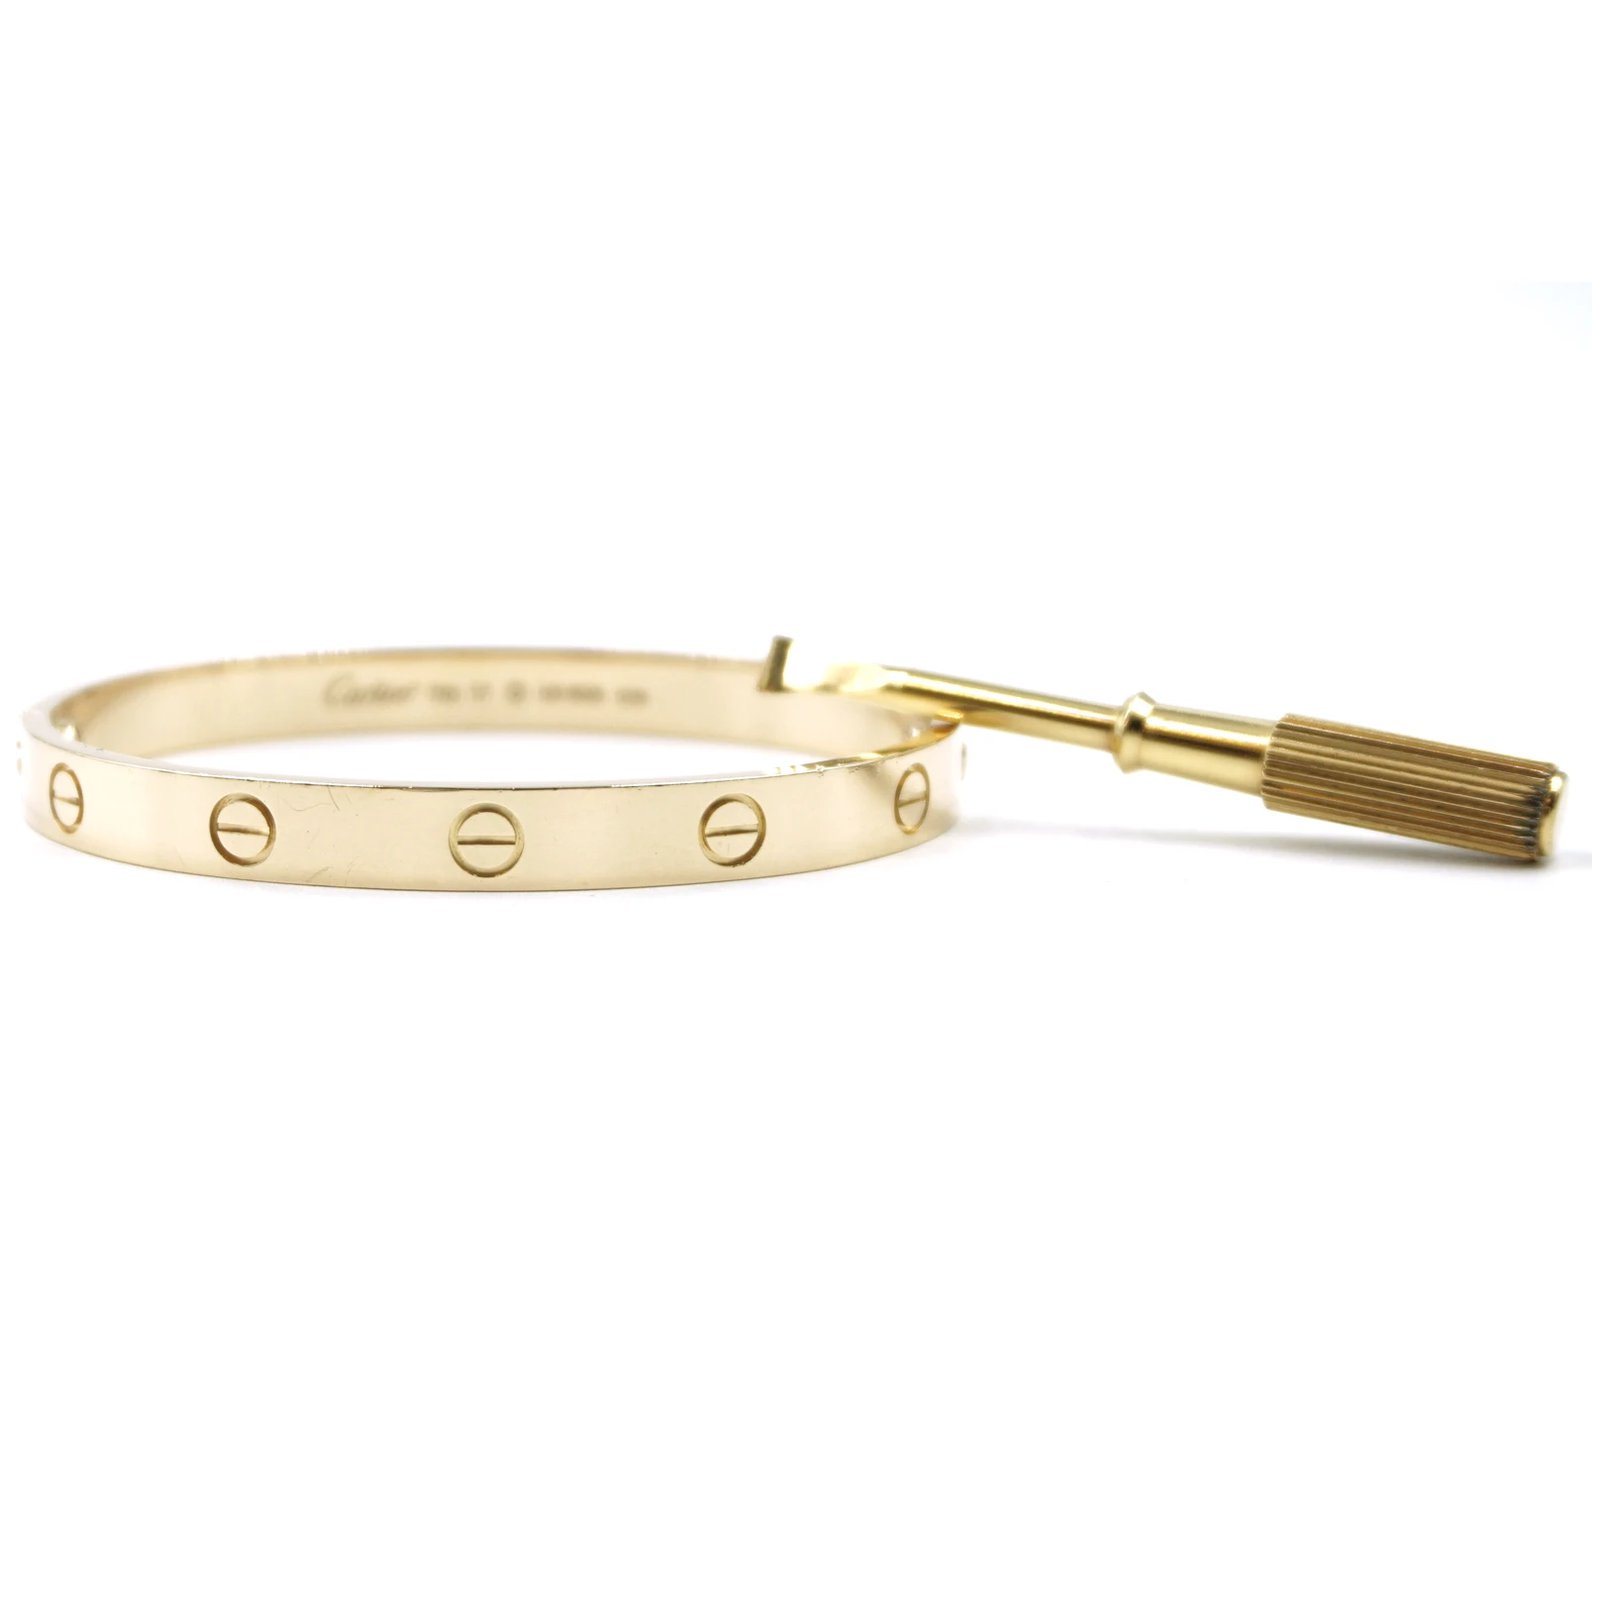 cartier love bracelet rose gold size 17